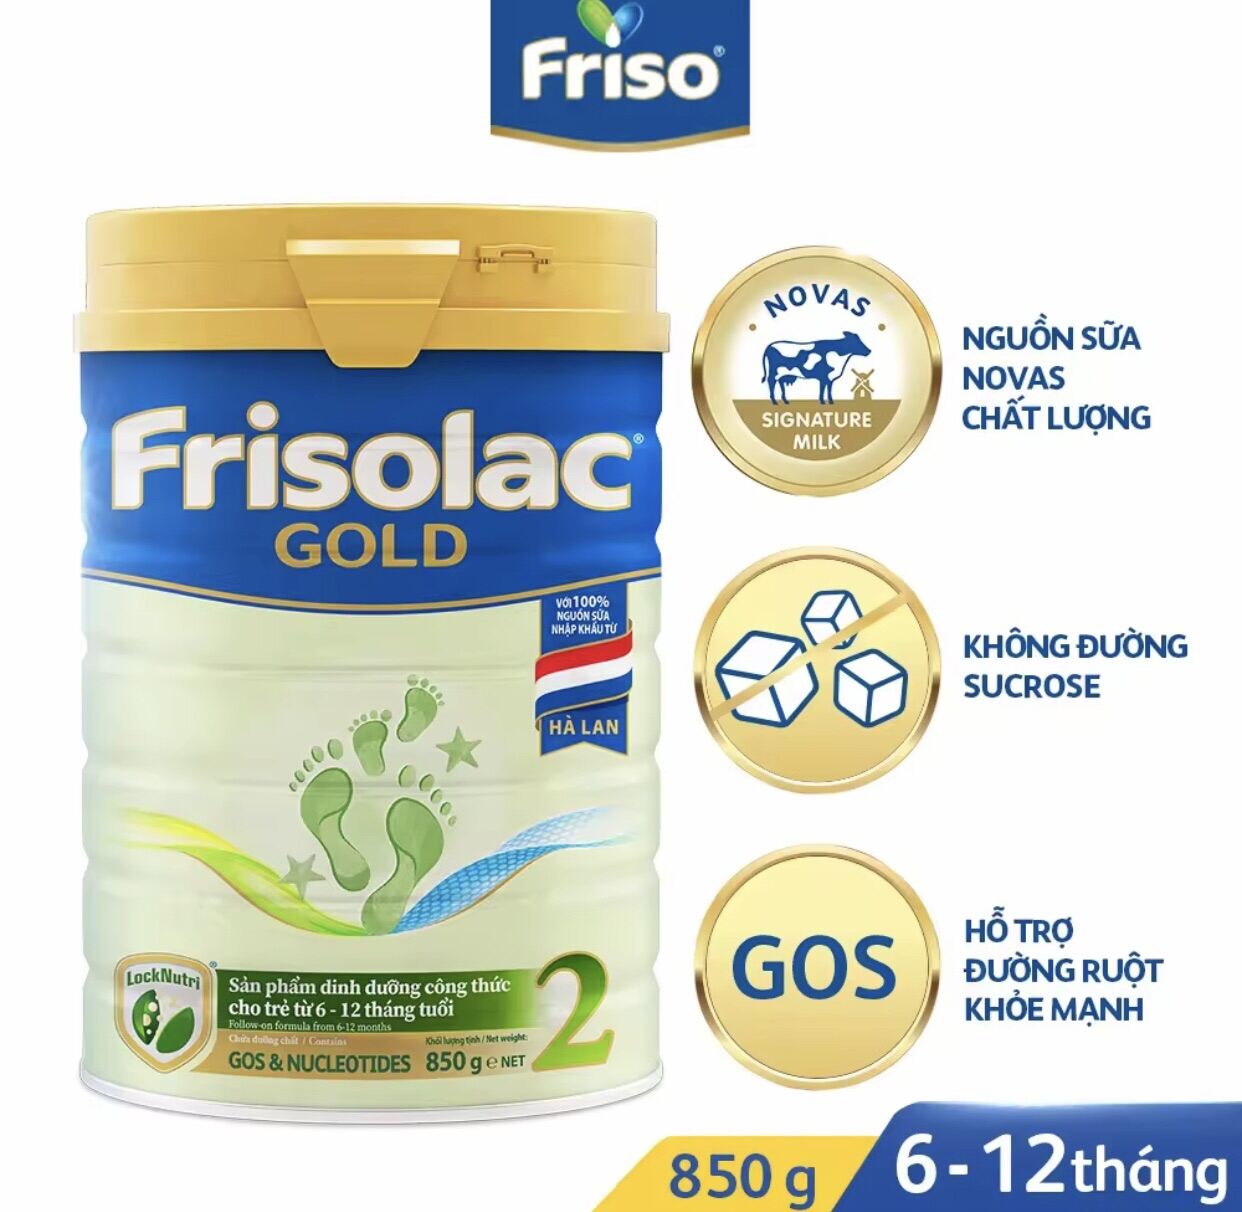 Sữa Bột Frisolac Gold 2 lon 850g Date 10 23